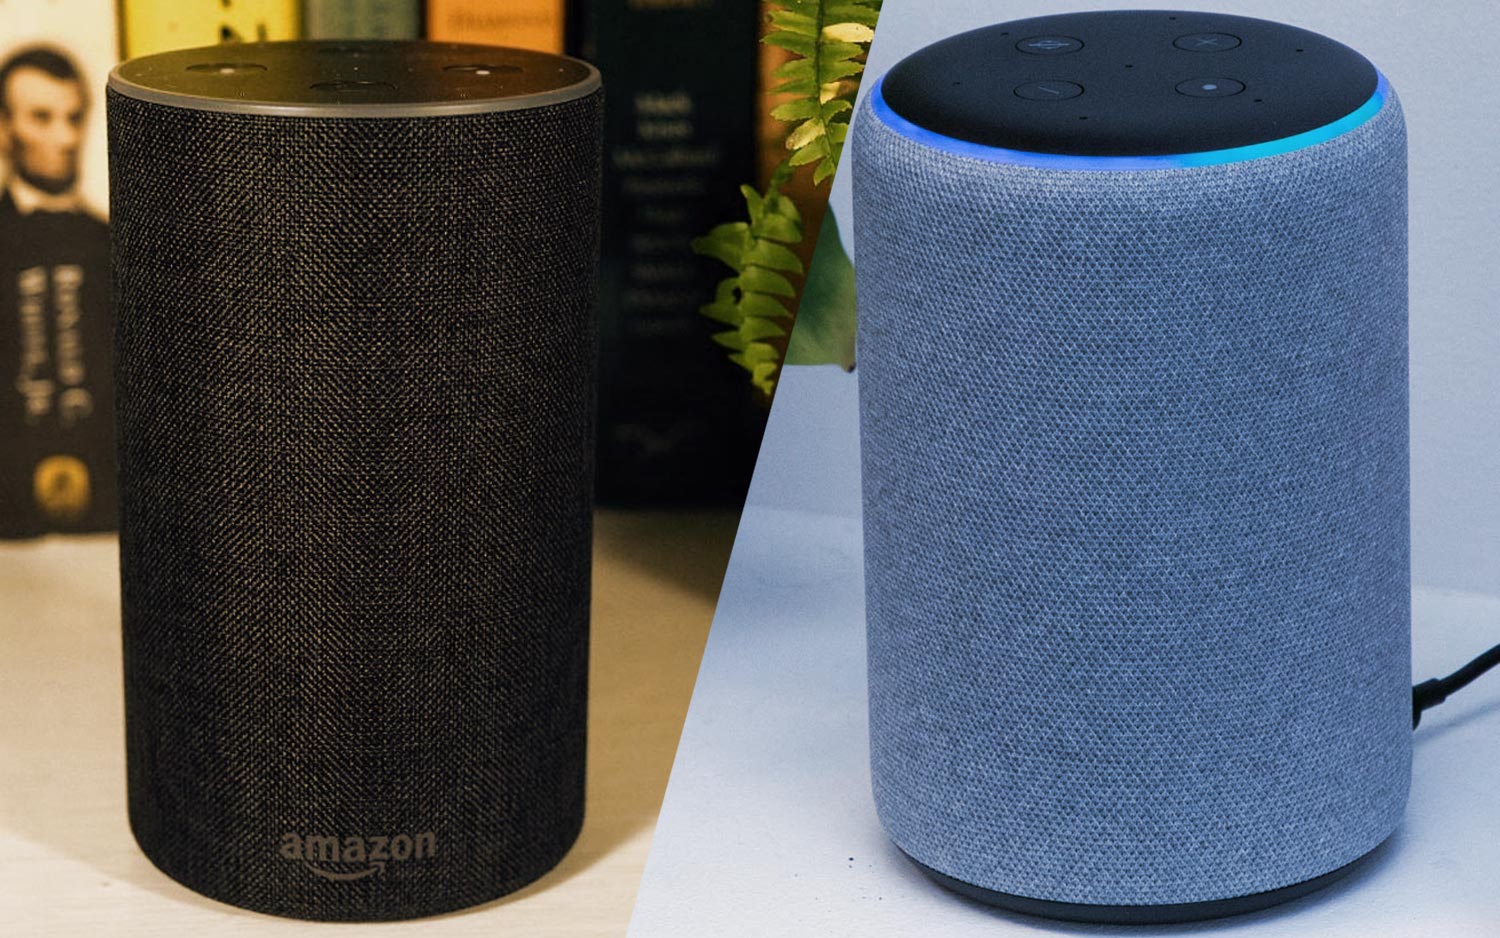 Amazon Echo vs Echo Plus: What Should 